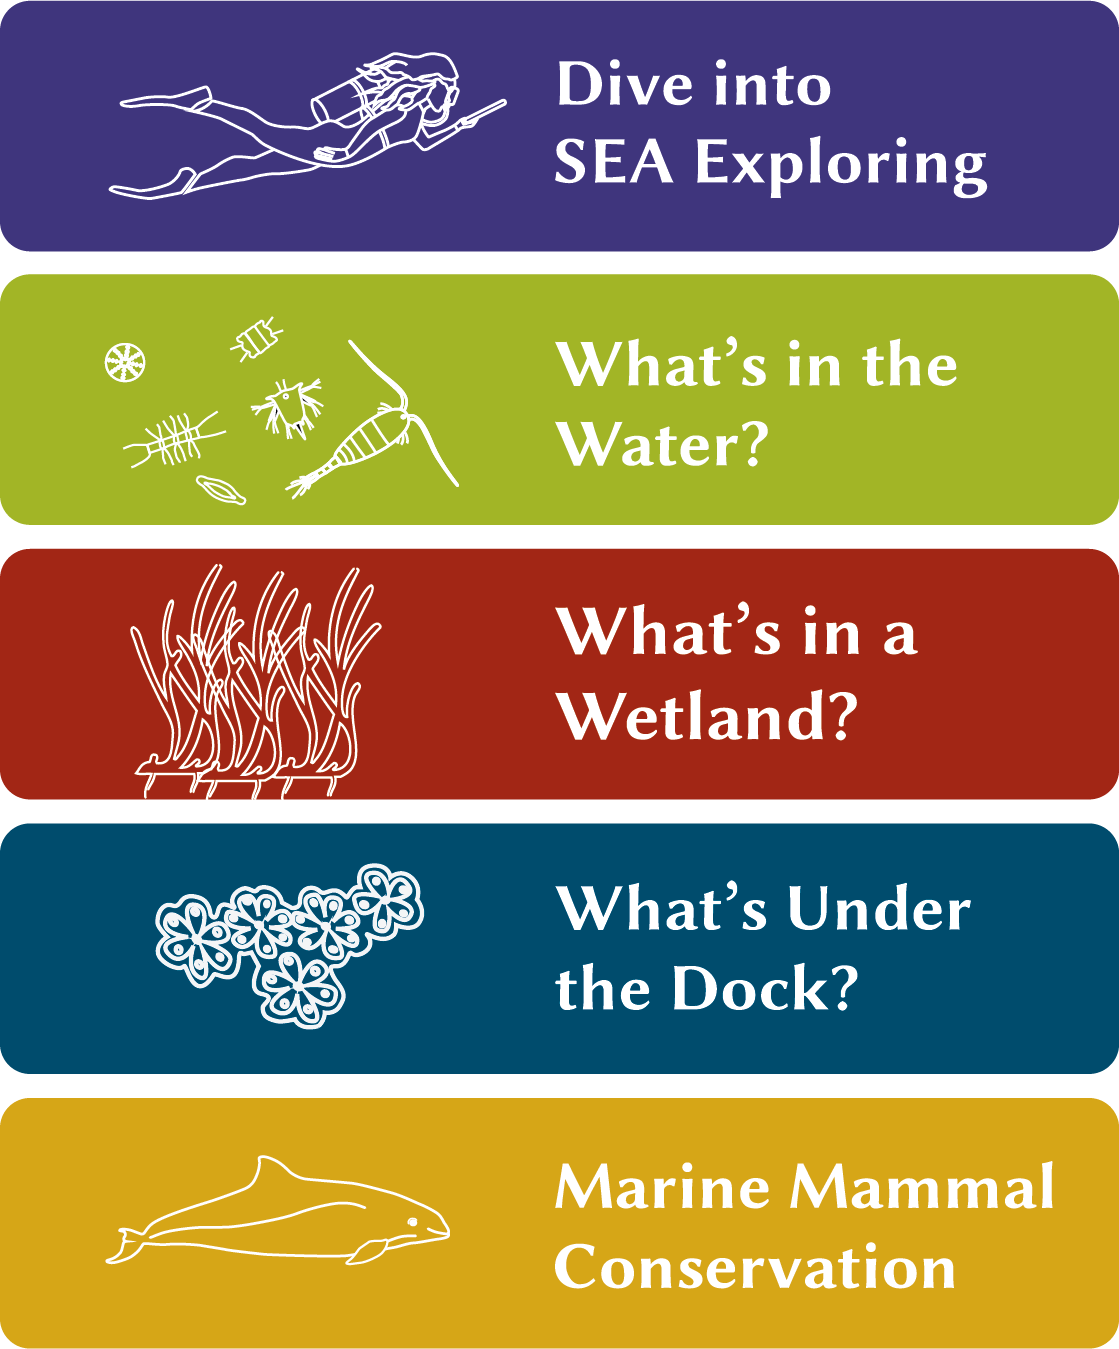 chart of activities, Dive, Water, Wetland, Dock, Marine Mammal conservation